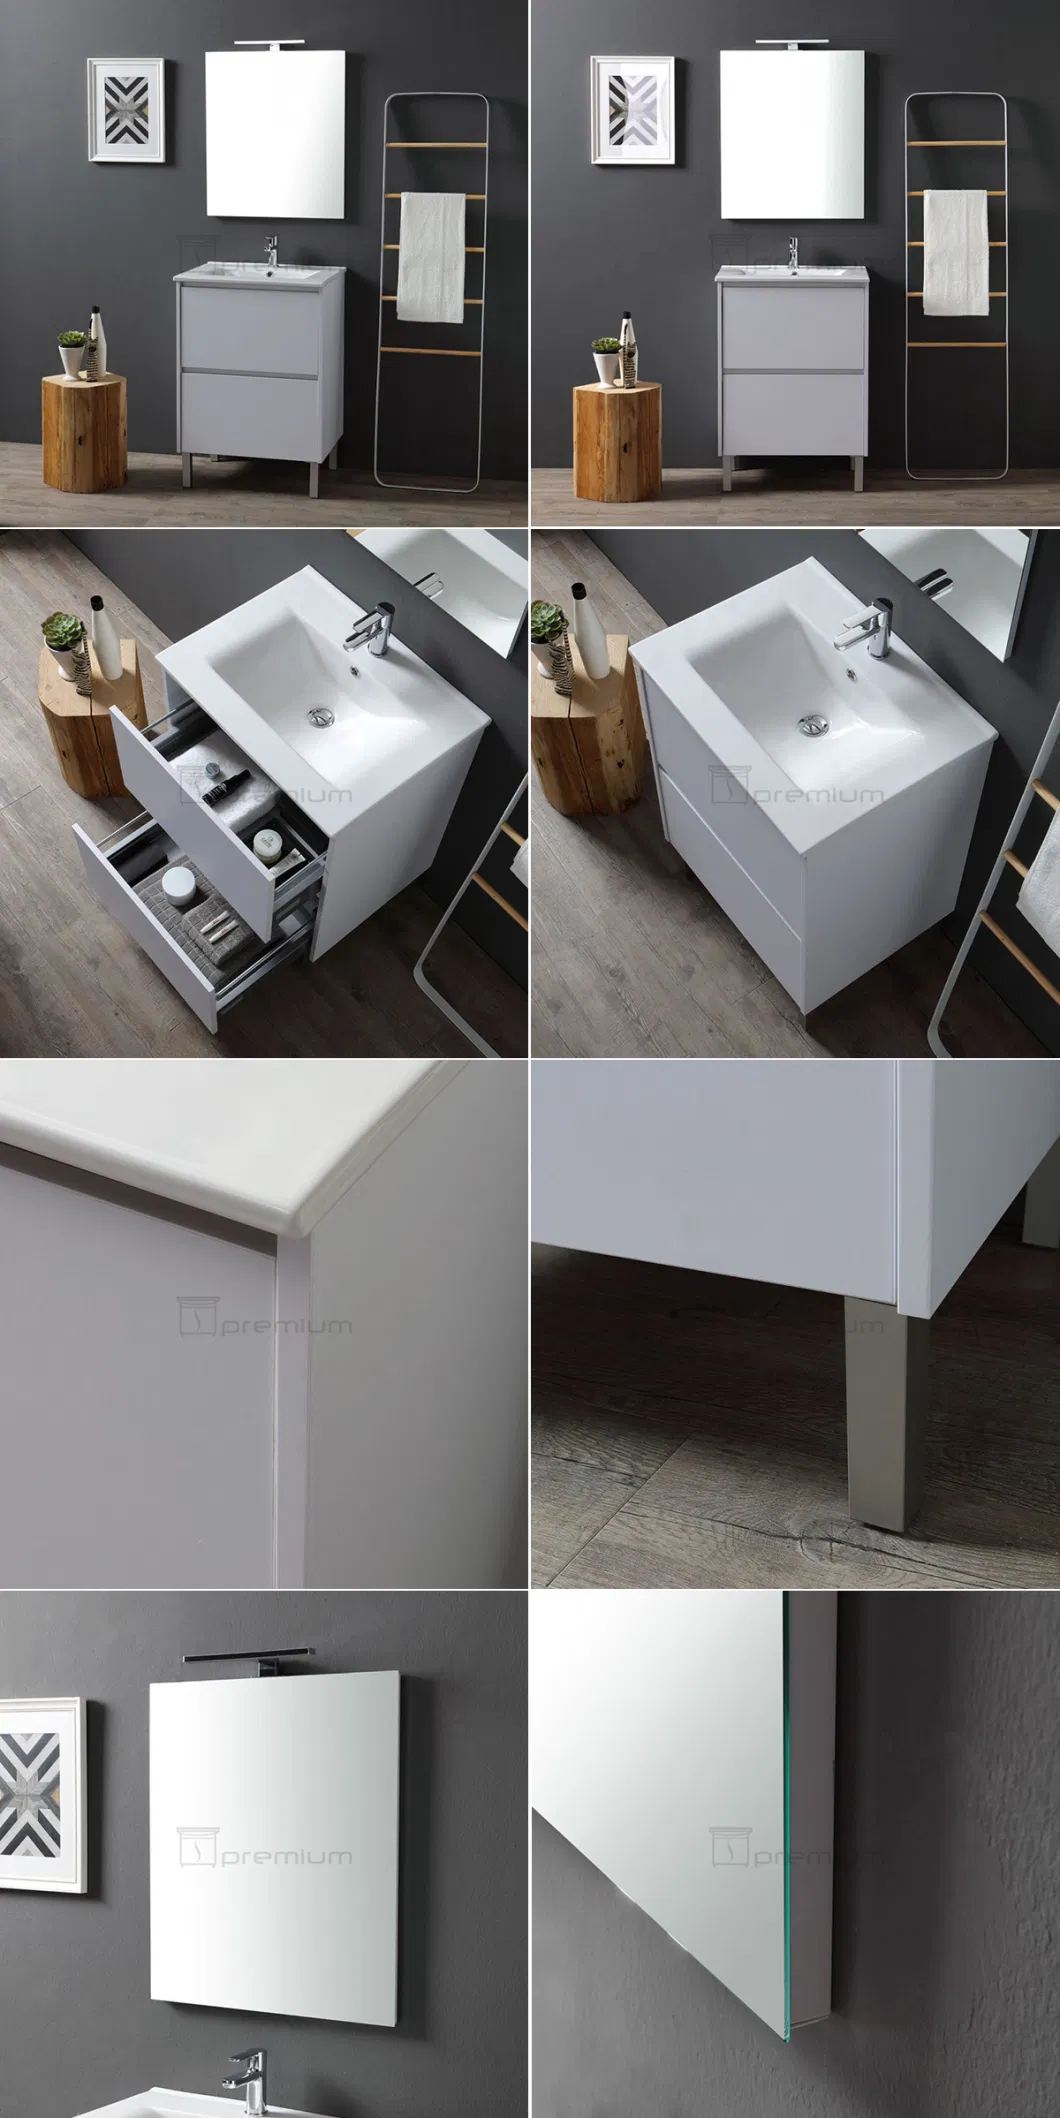 Wholesale Floor Standing MDF Bathroom Vanity Cabinet Floor Mounted Bathroom Furniture